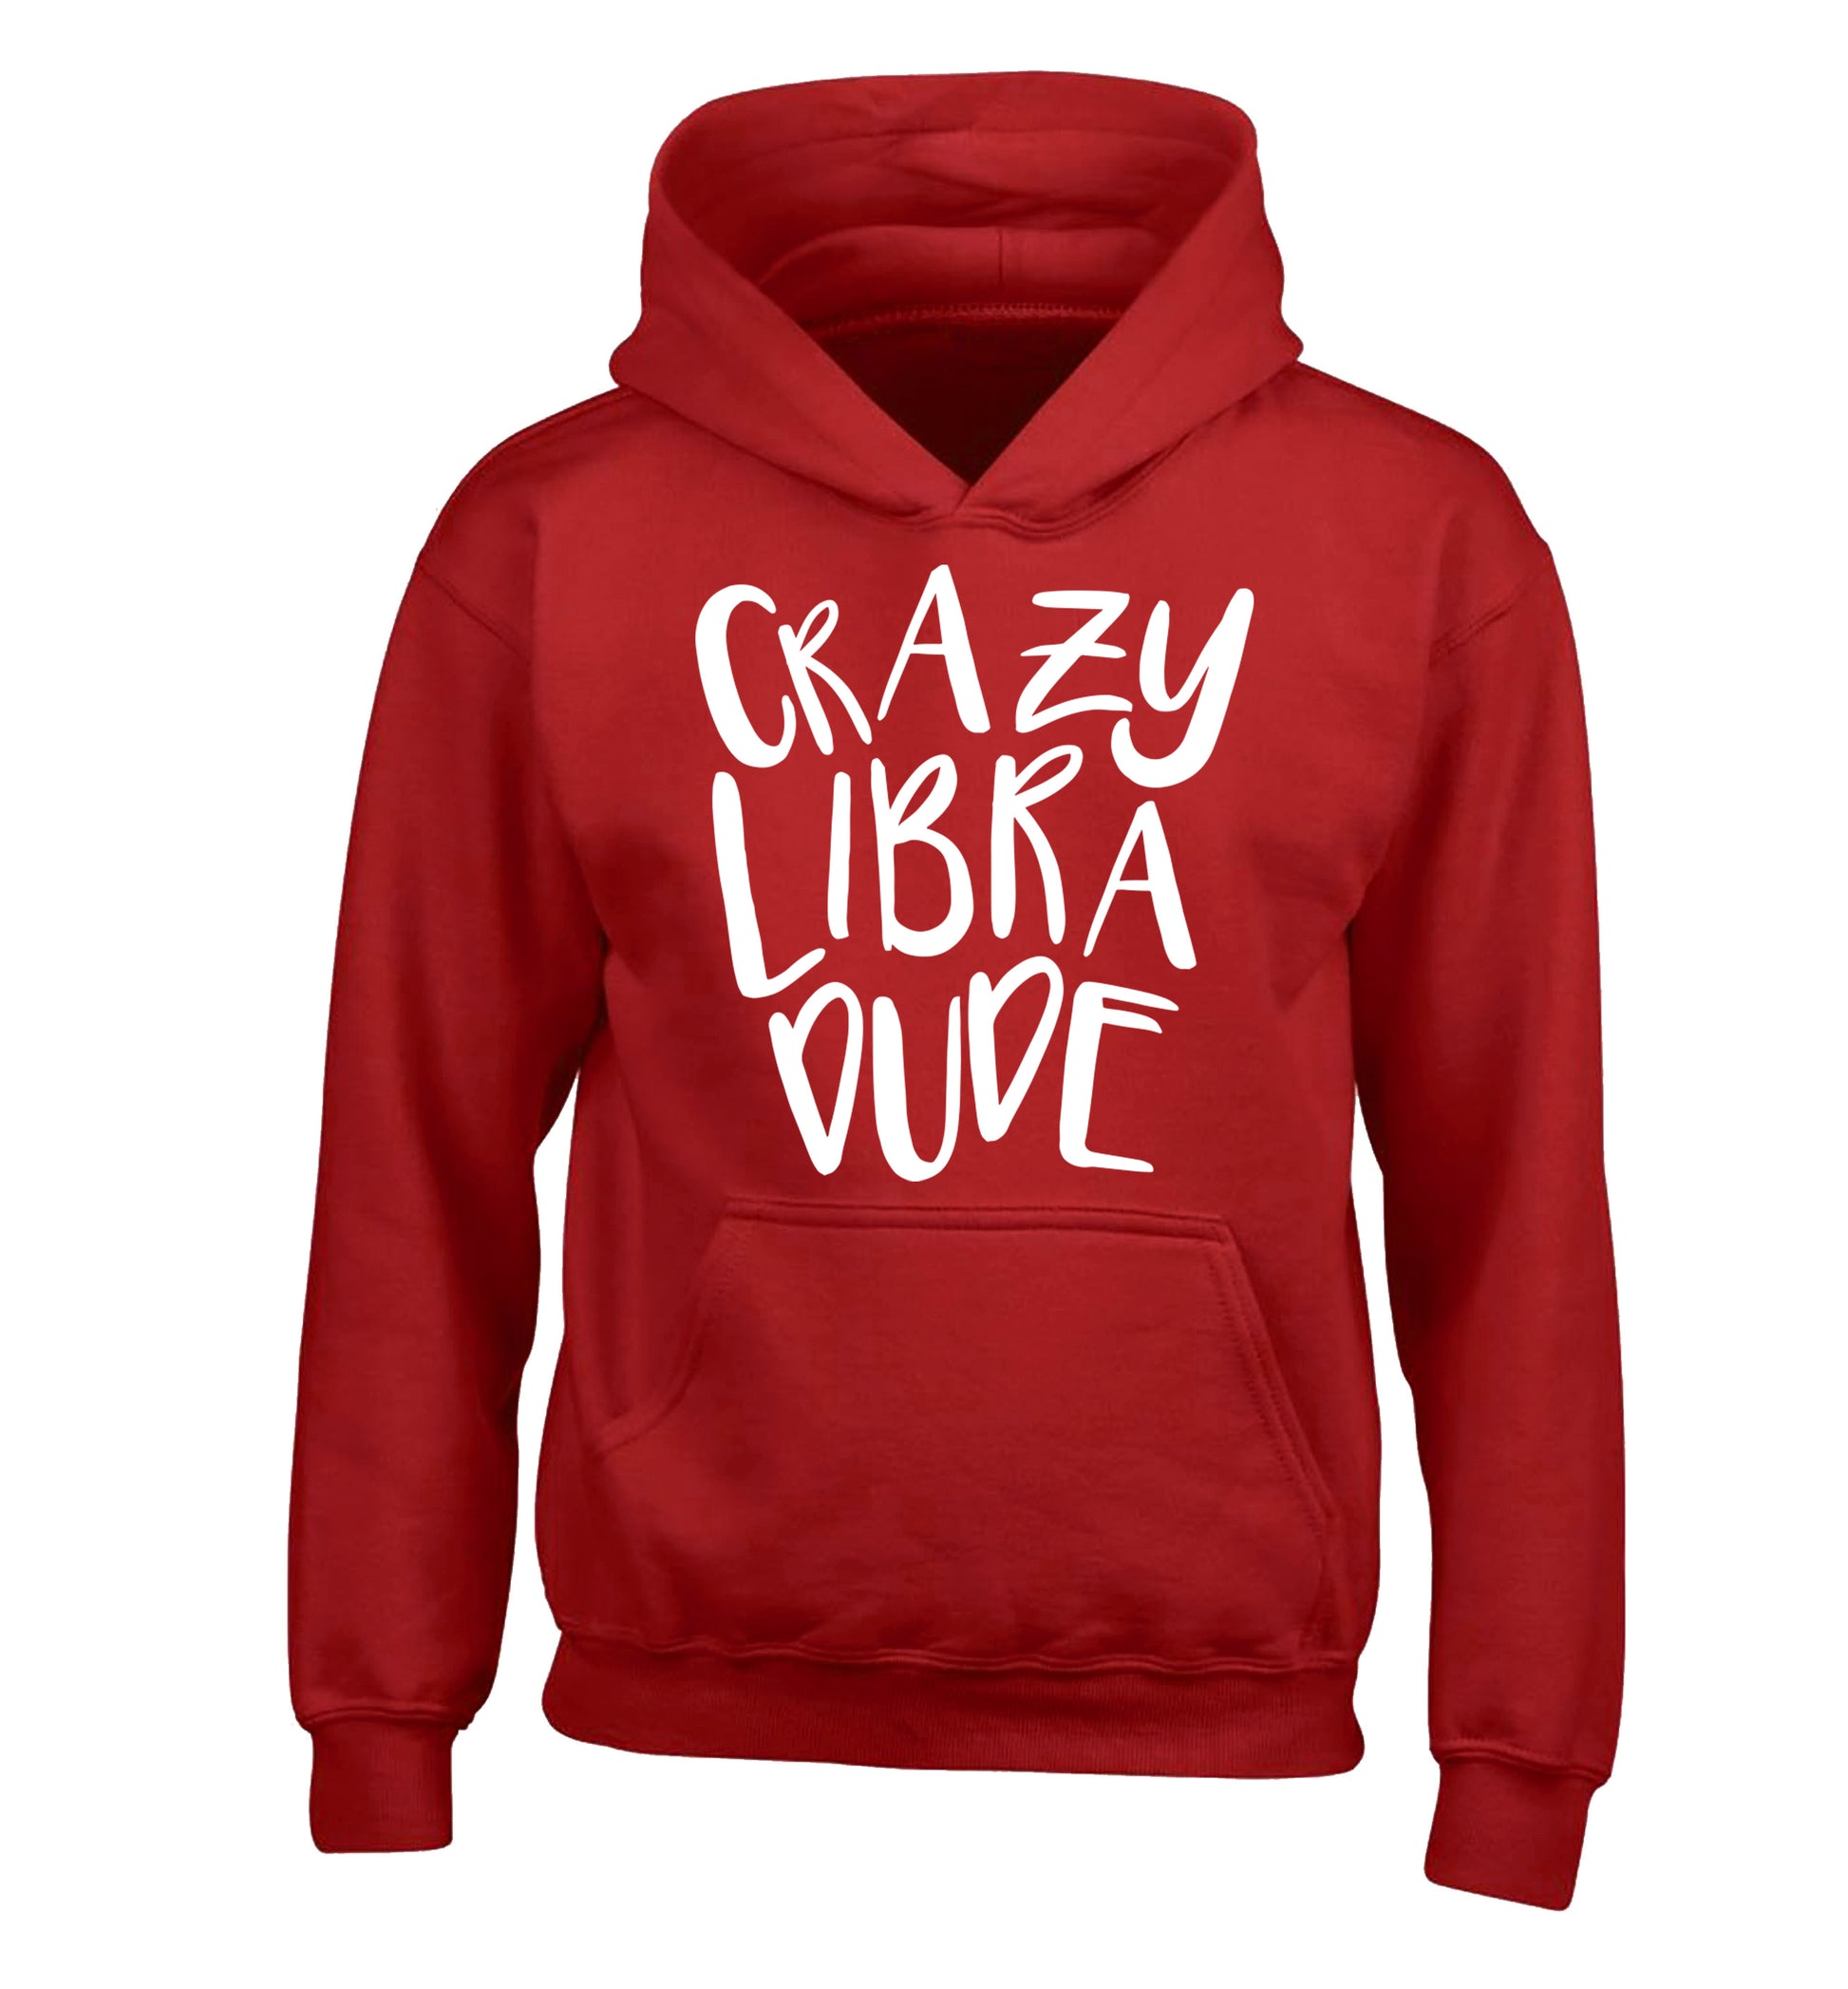 Crazy libra dude children's red hoodie 12-13 Years